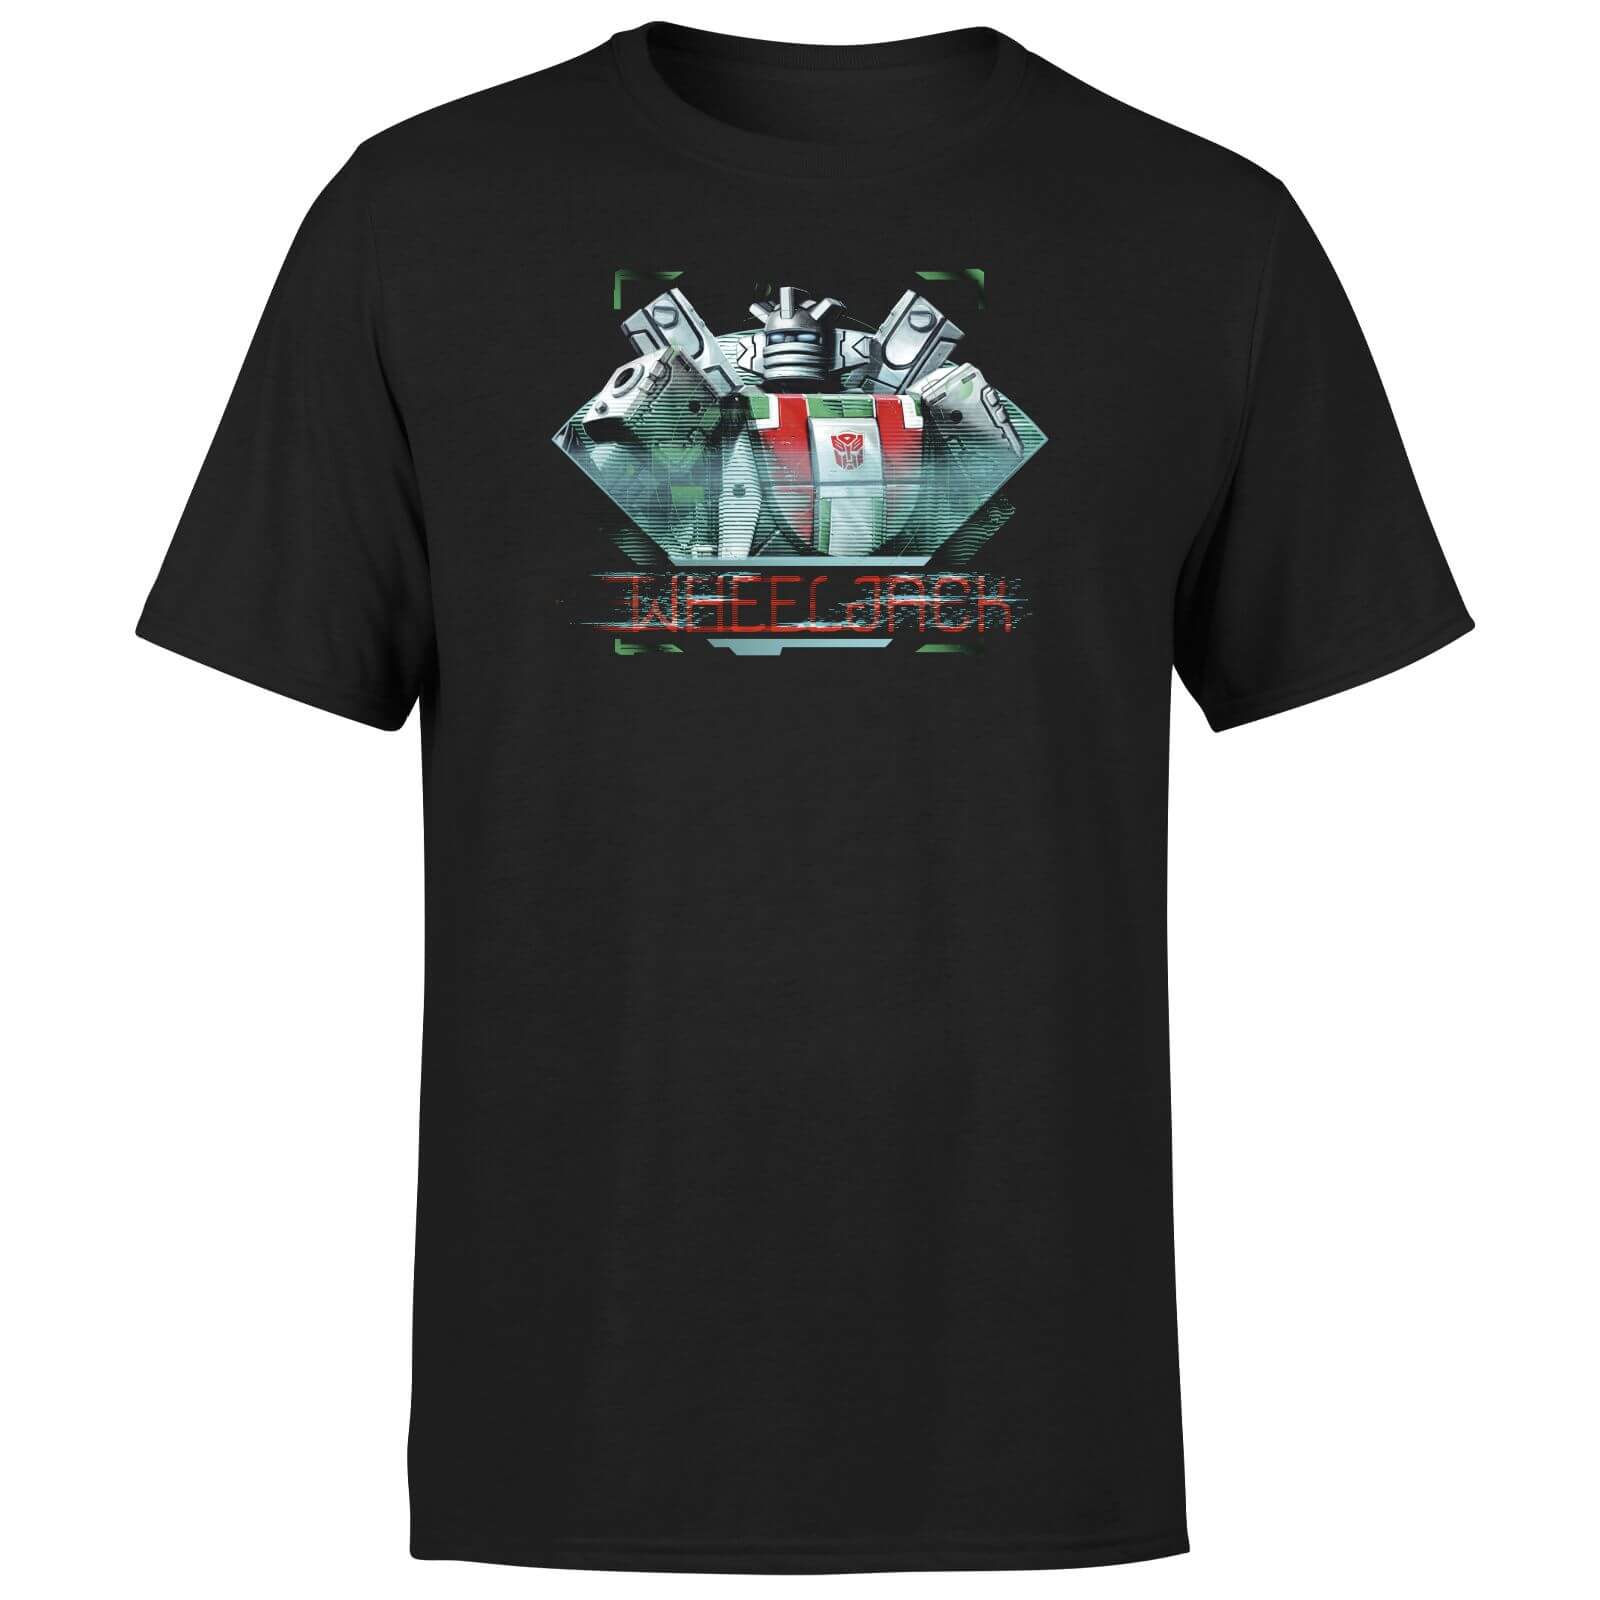 Transformers Wheeljack Glitch Unisex T-Shirt - Black - S - Black